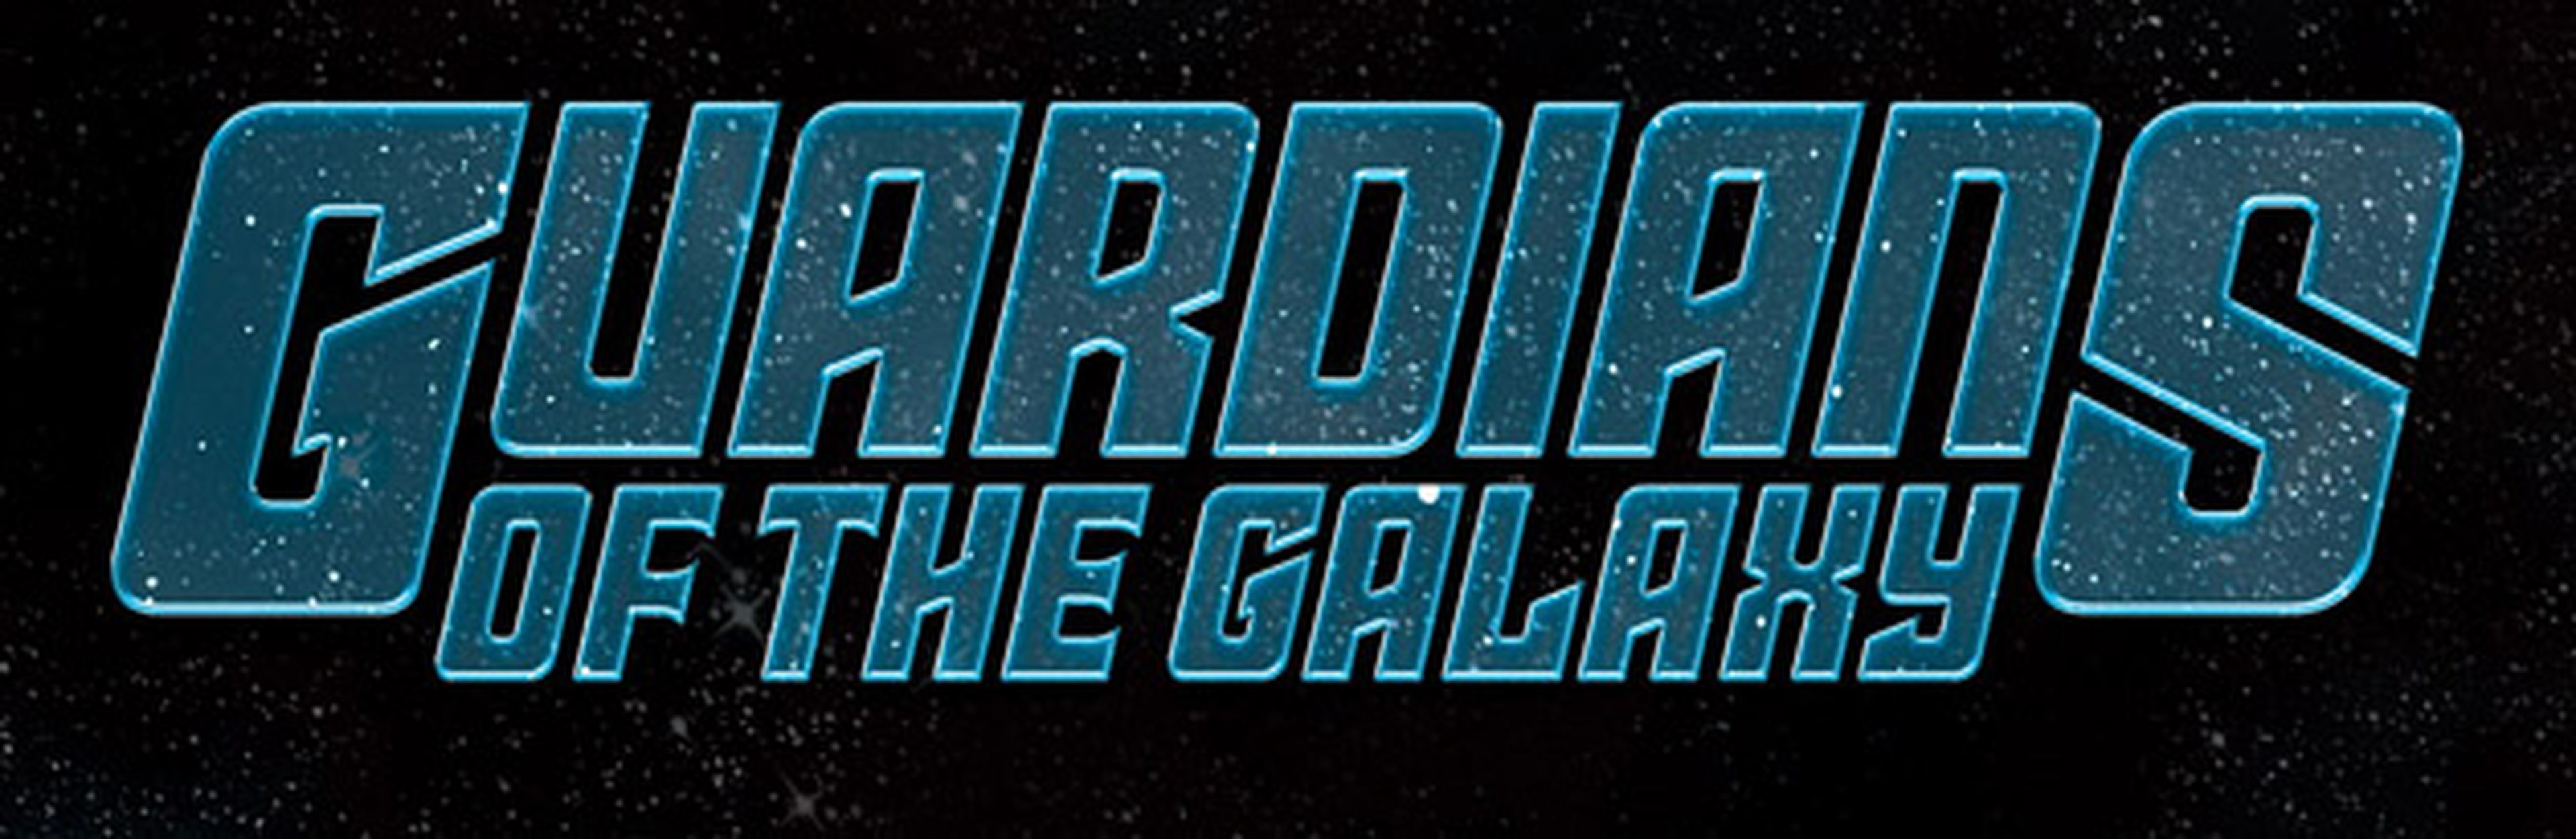 Avance EEUU: Guardianes de la Galaxia nº 1